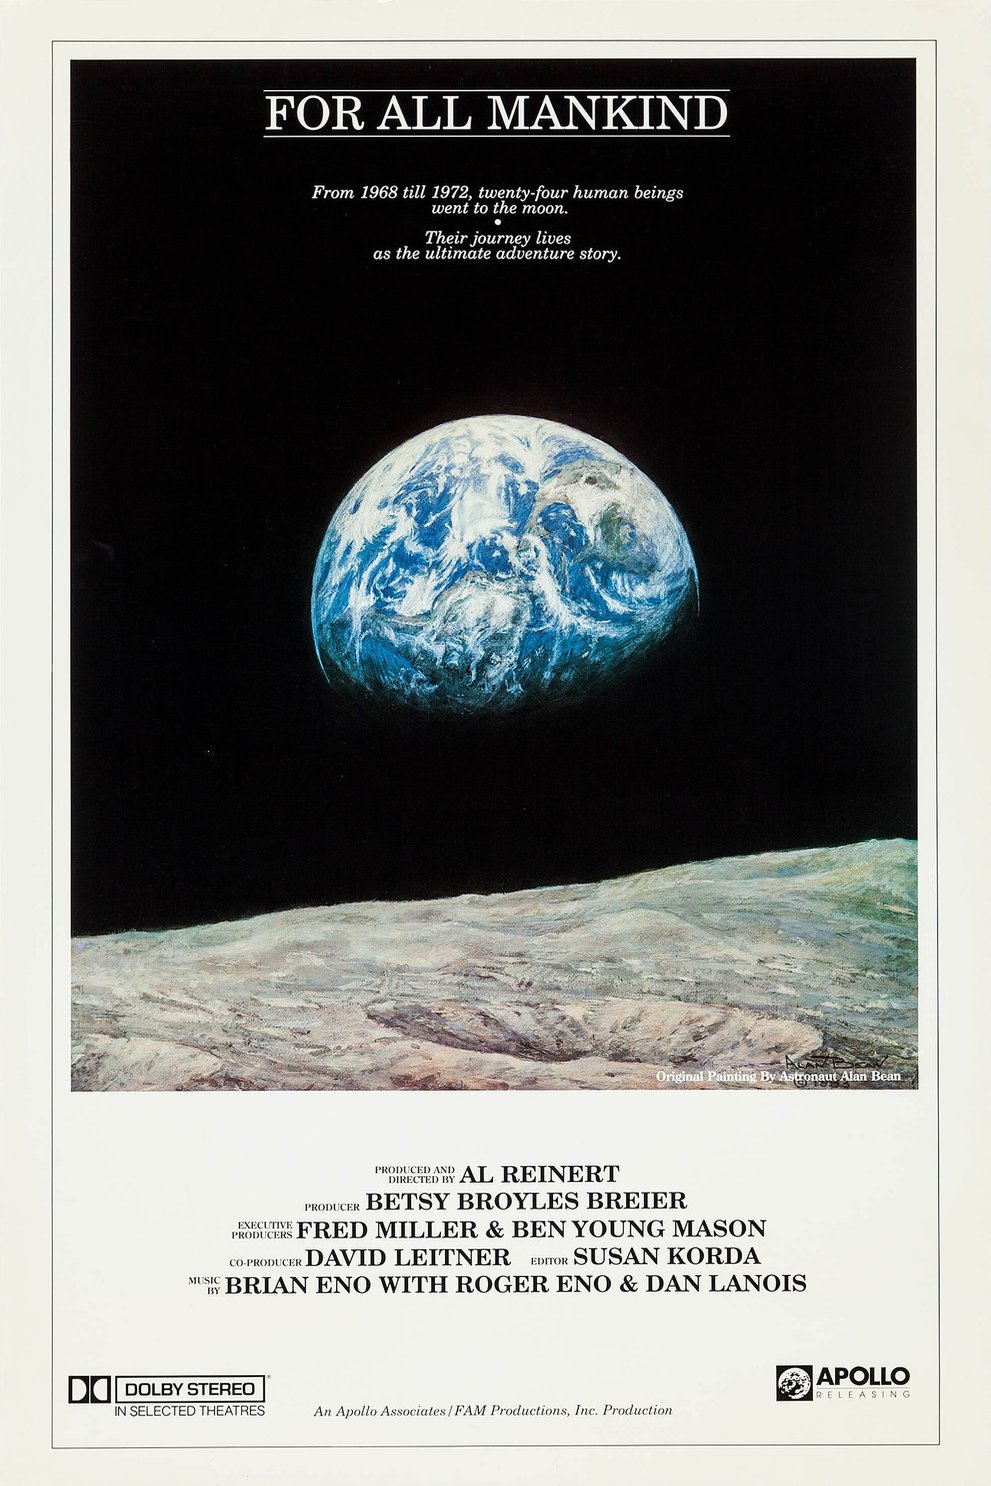 L'affiche du film For All Mankind